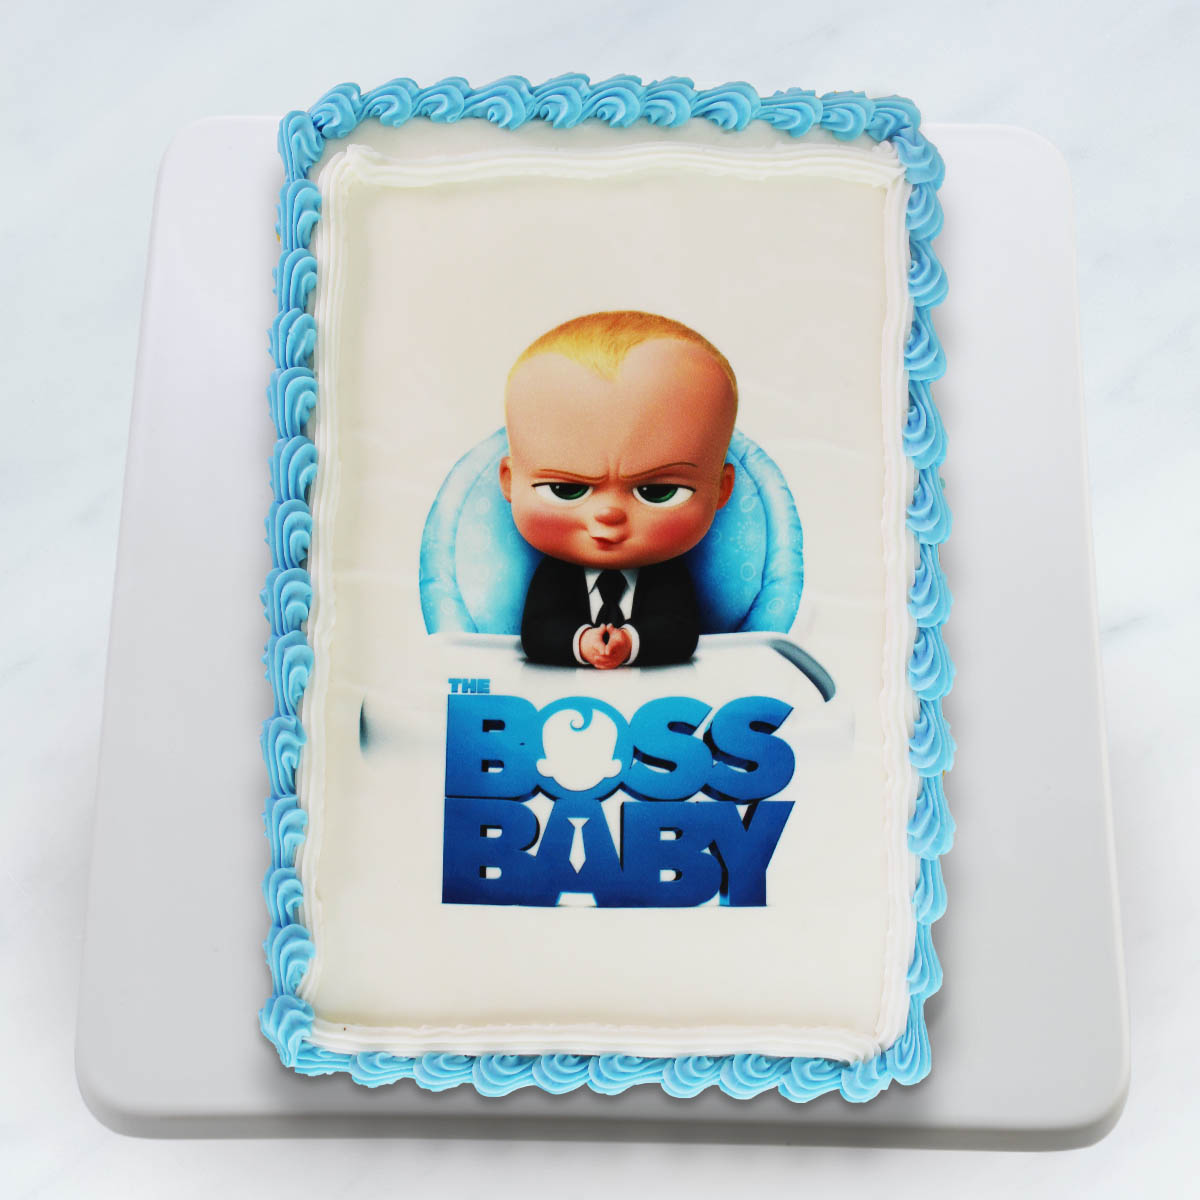 Grumpy Boss Baby- Order Online Grumpy Boss Baby @ Flavoursguru